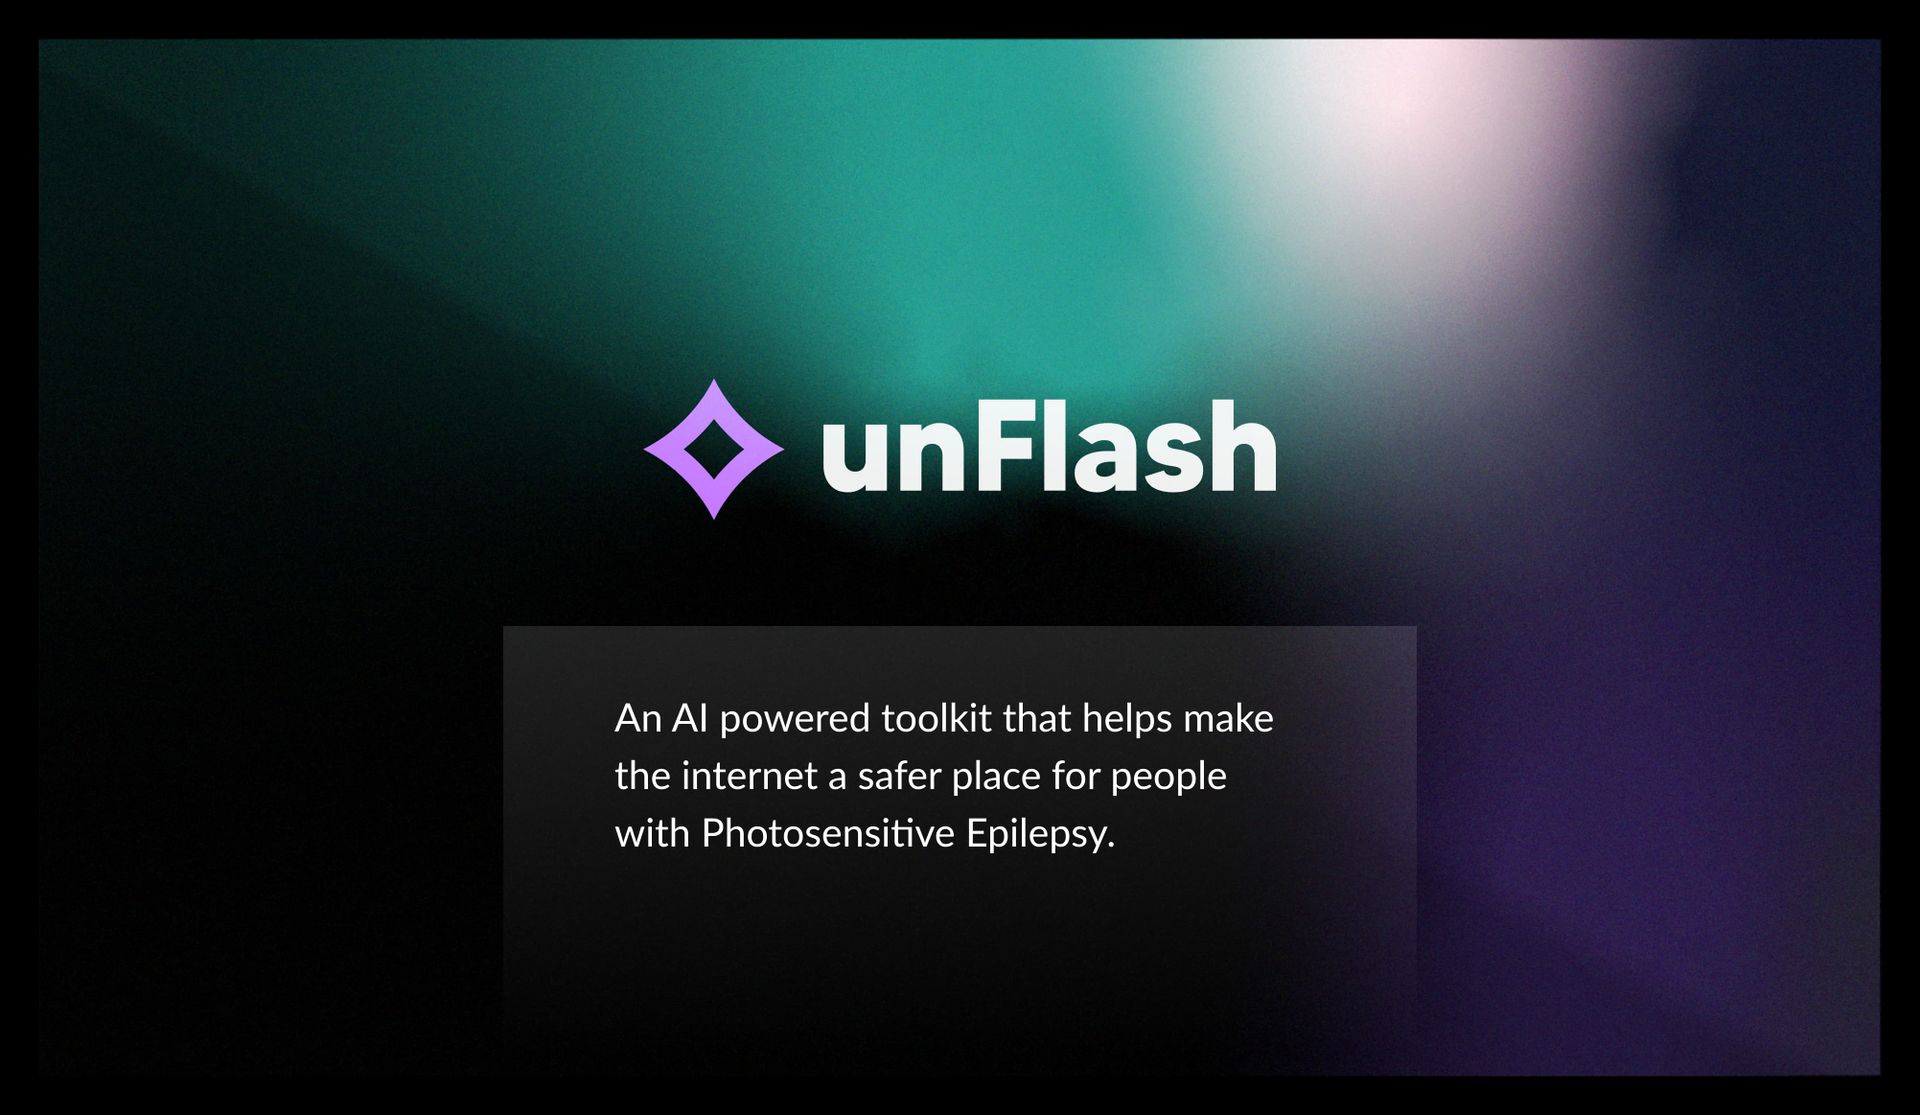 unFlash brand image